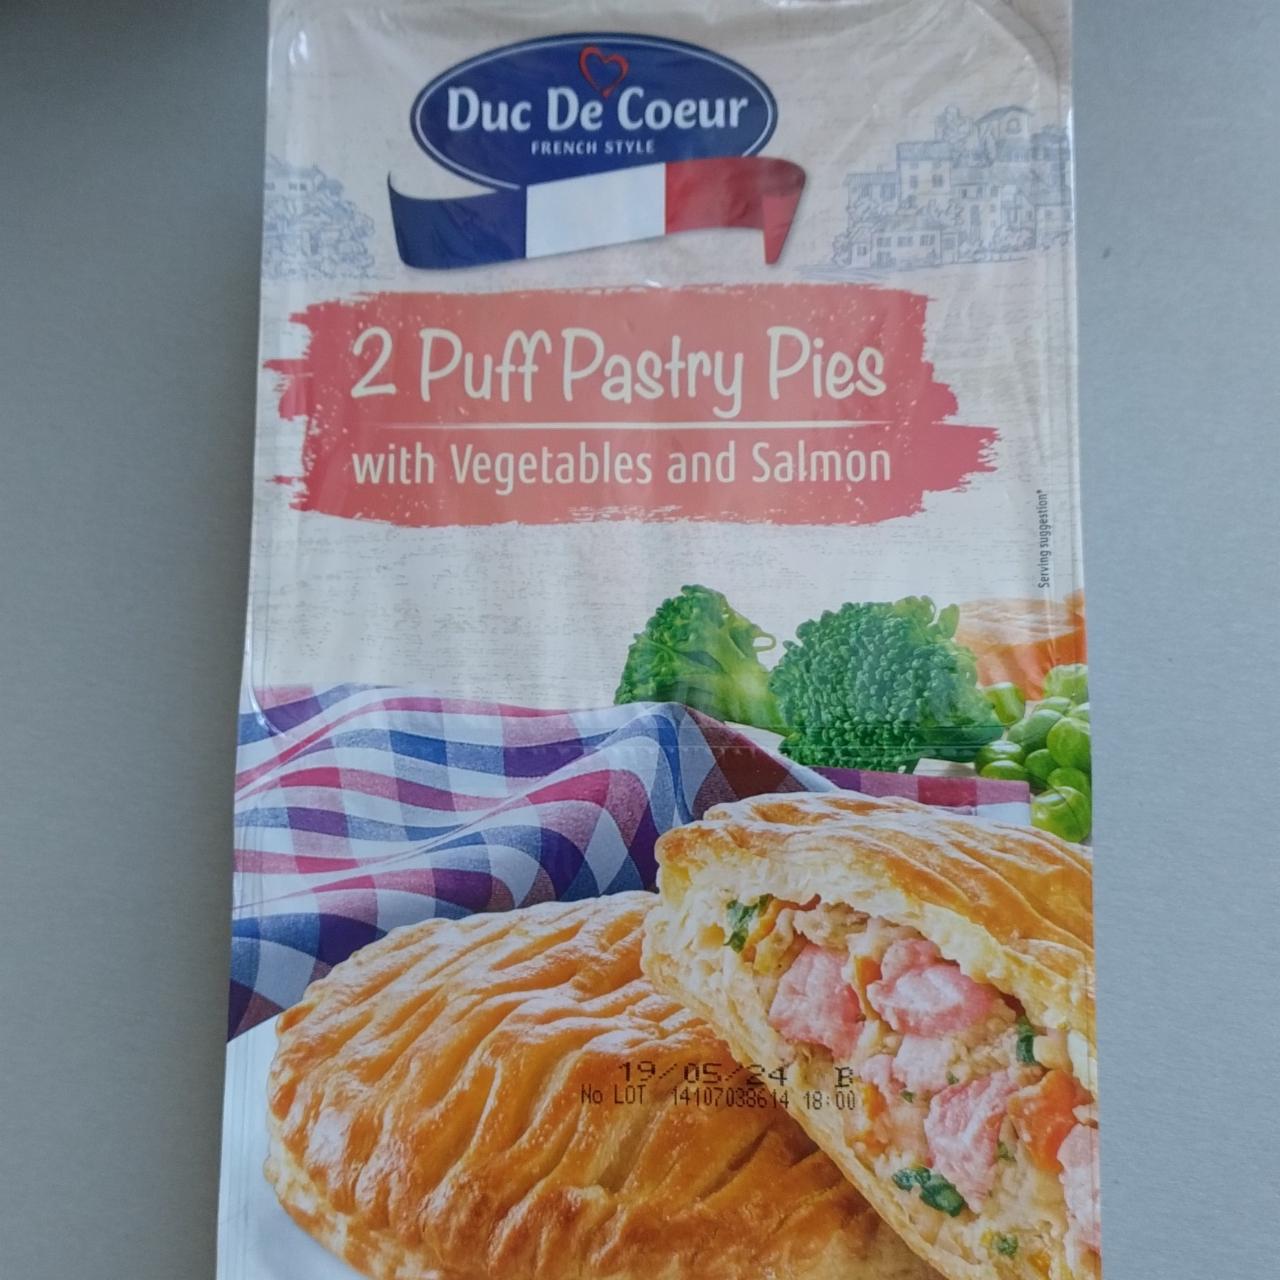 Zdjęcia - 2 Puff Pastry Pies Duc De Coeur